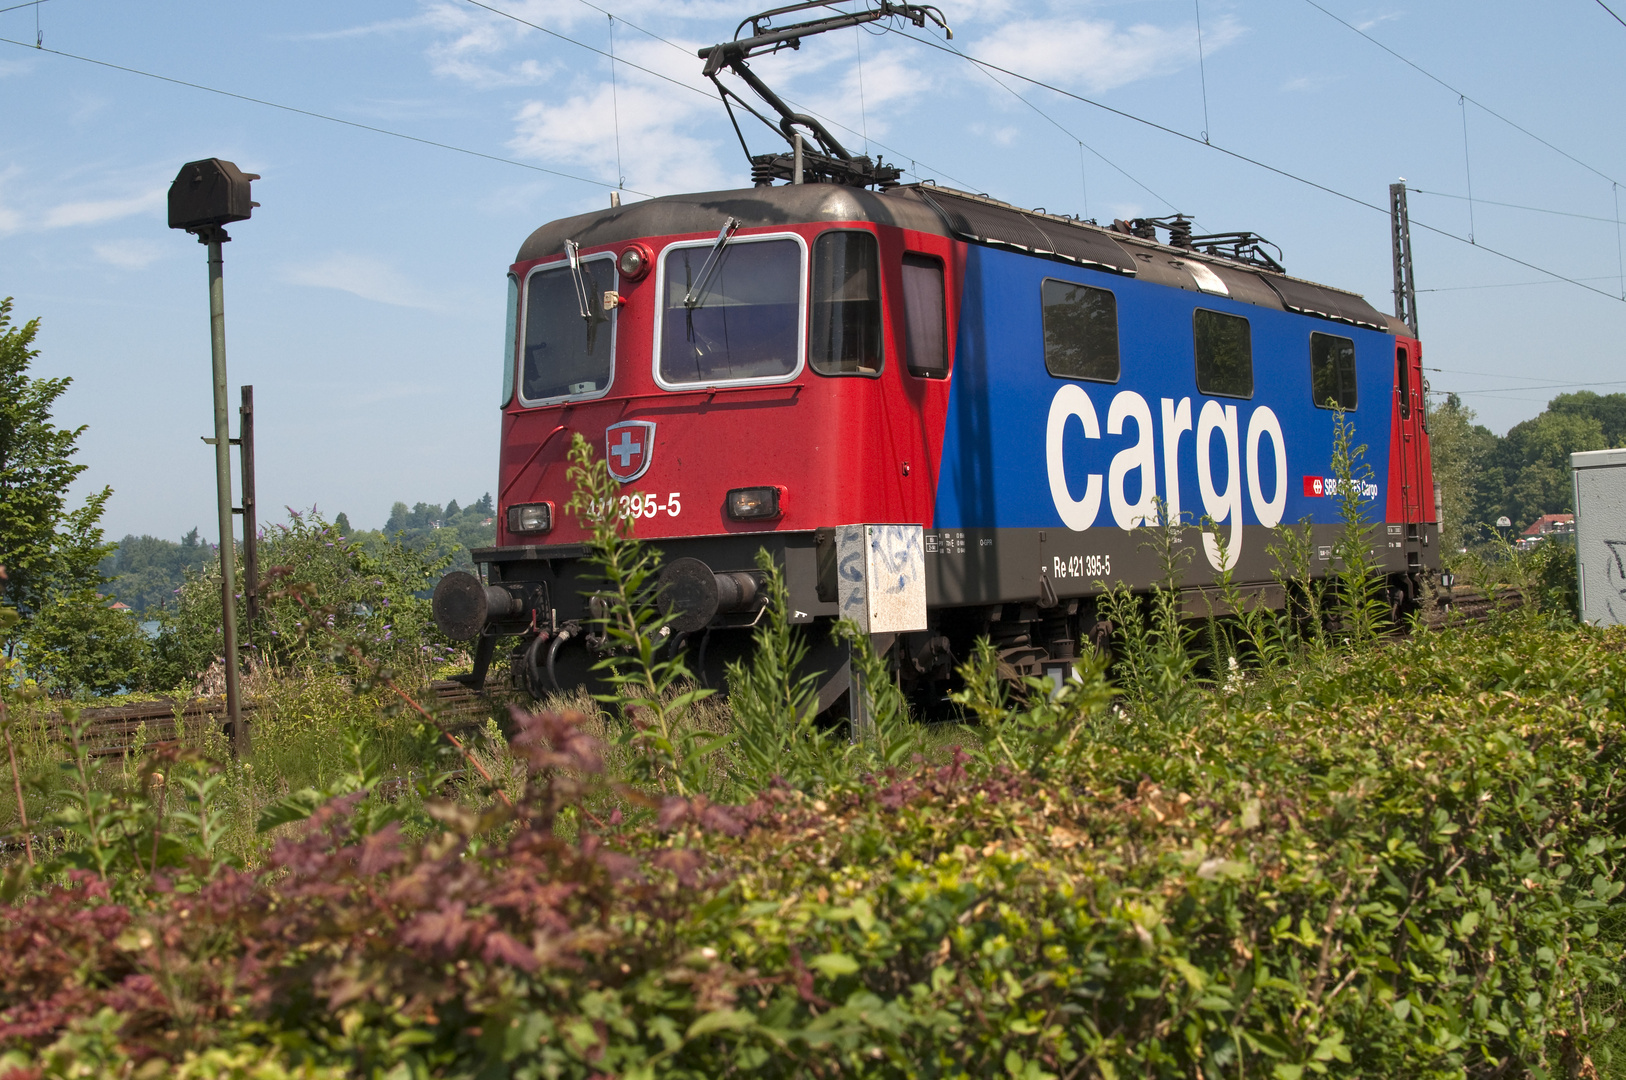 Swiss Cargo 421 395-5